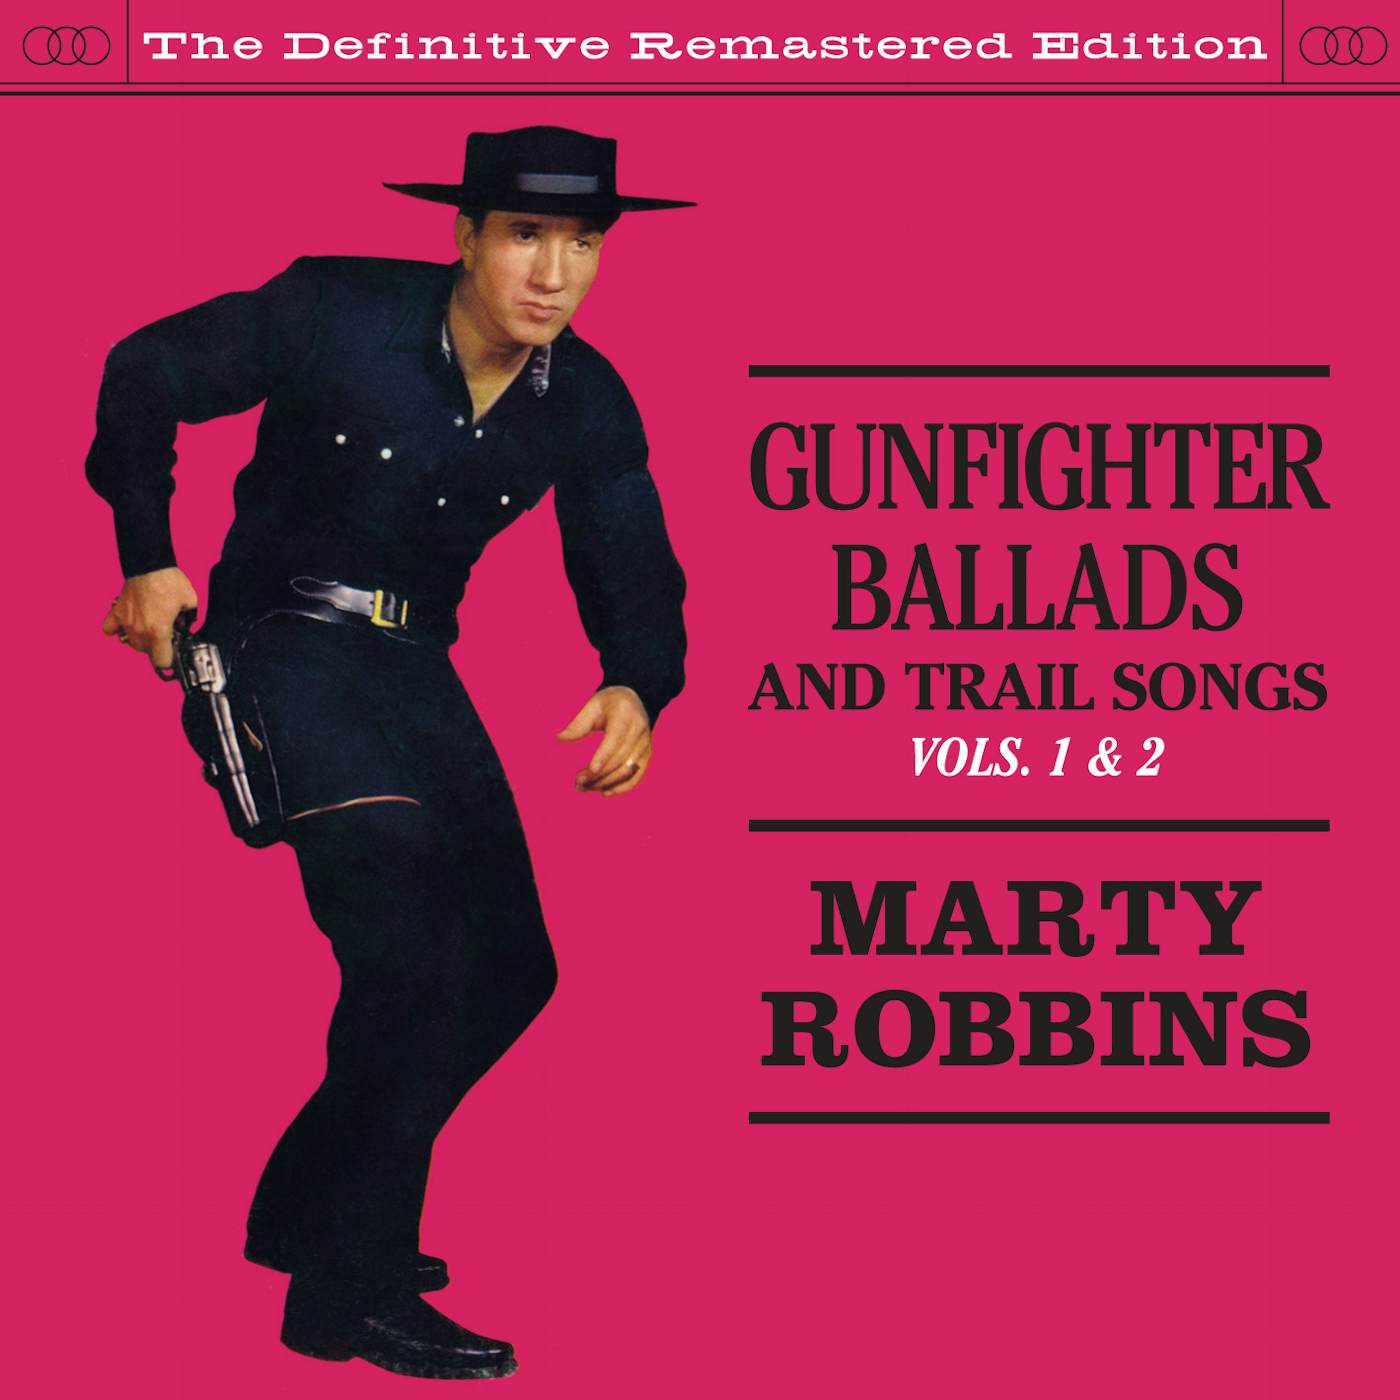 Marty Robbins GUNFIGHTER BALLADS & TRAIL SONGS 1 & 2 CD